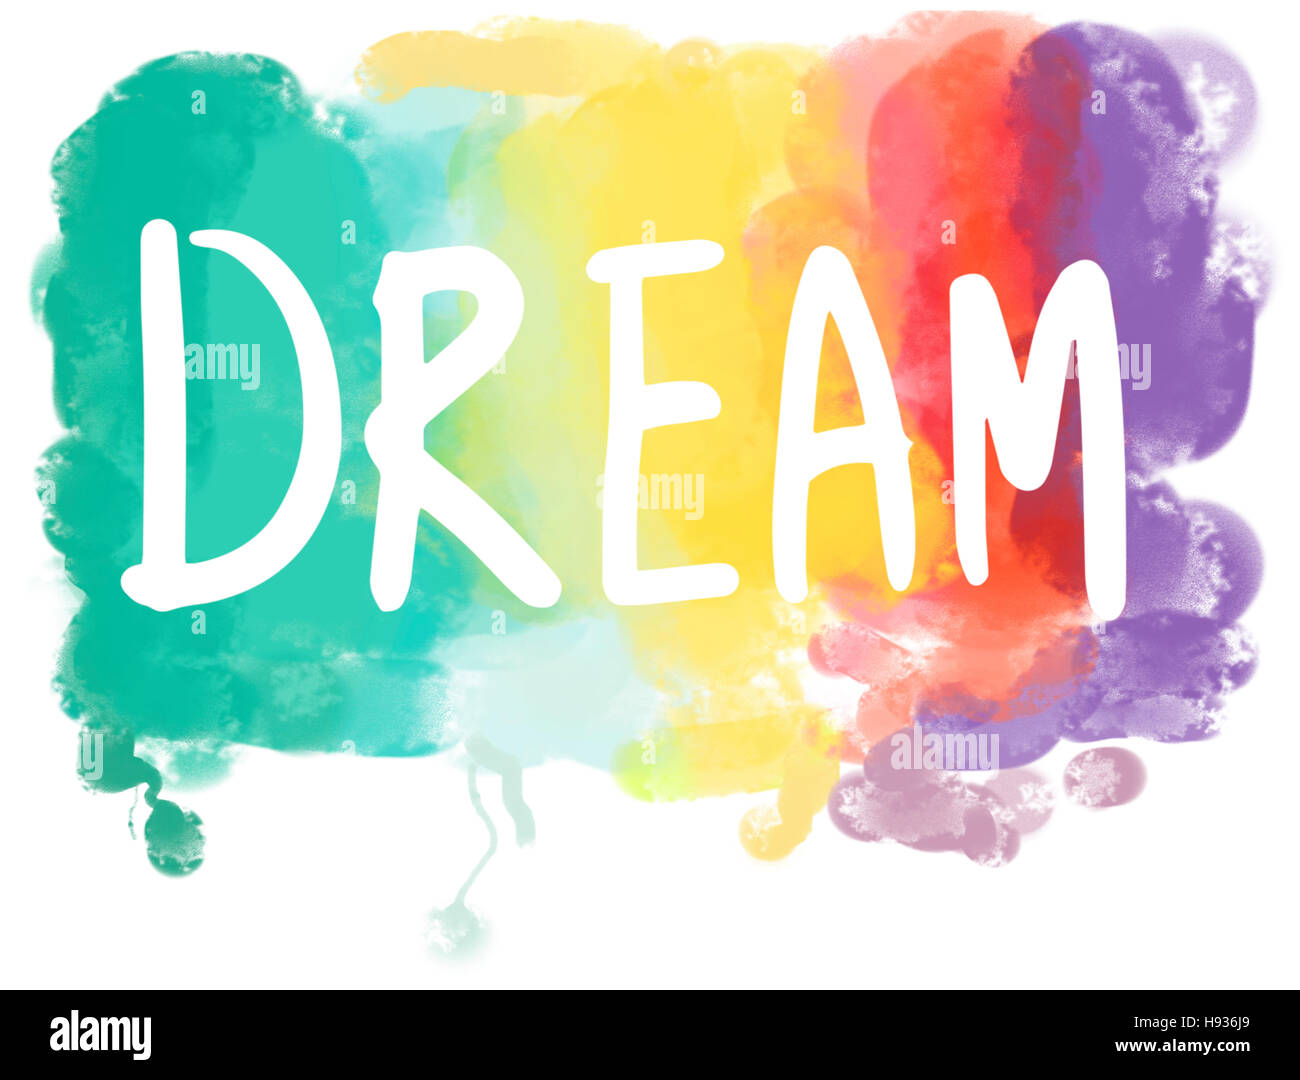 Dream Desire Hopeful Inspiration Imagination Goal Vision Concept Stock Photo